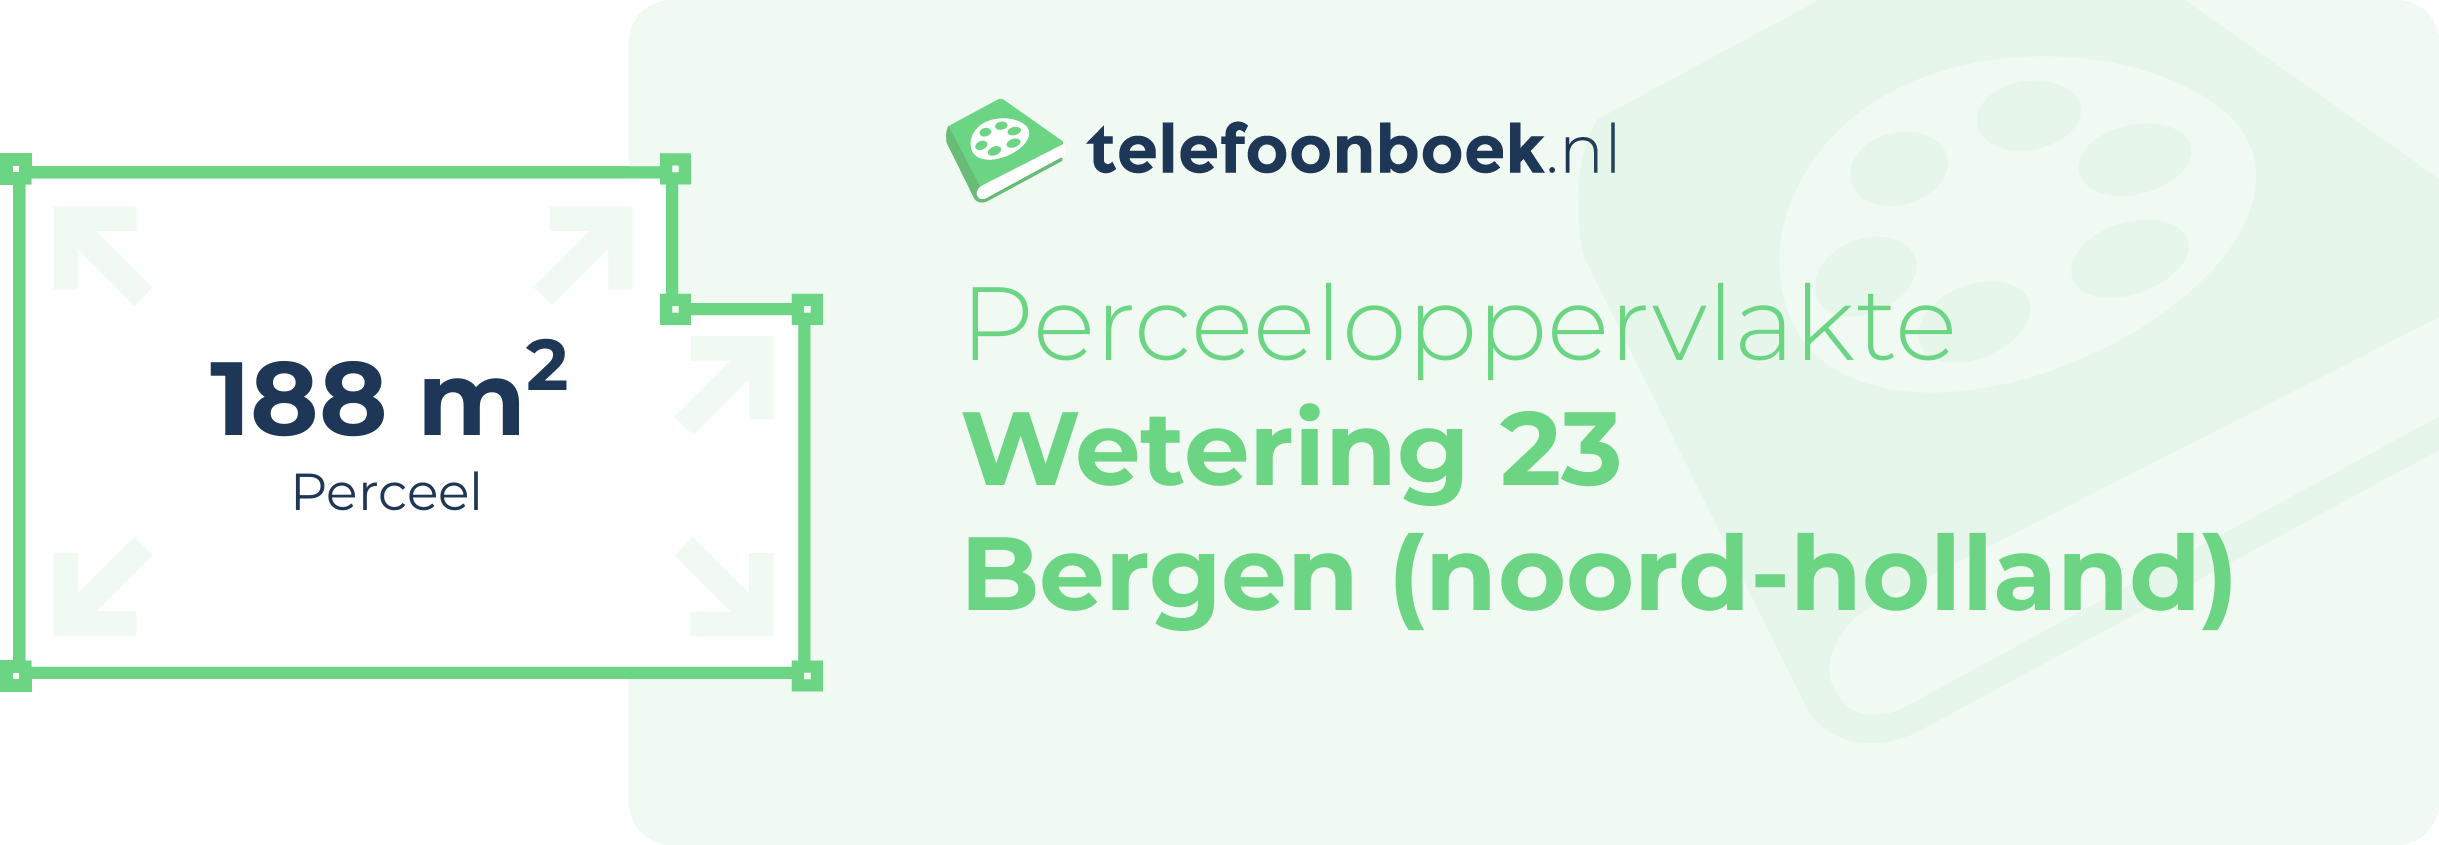 Perceeloppervlakte Wetering 23 Bergen (Noord-Holland)